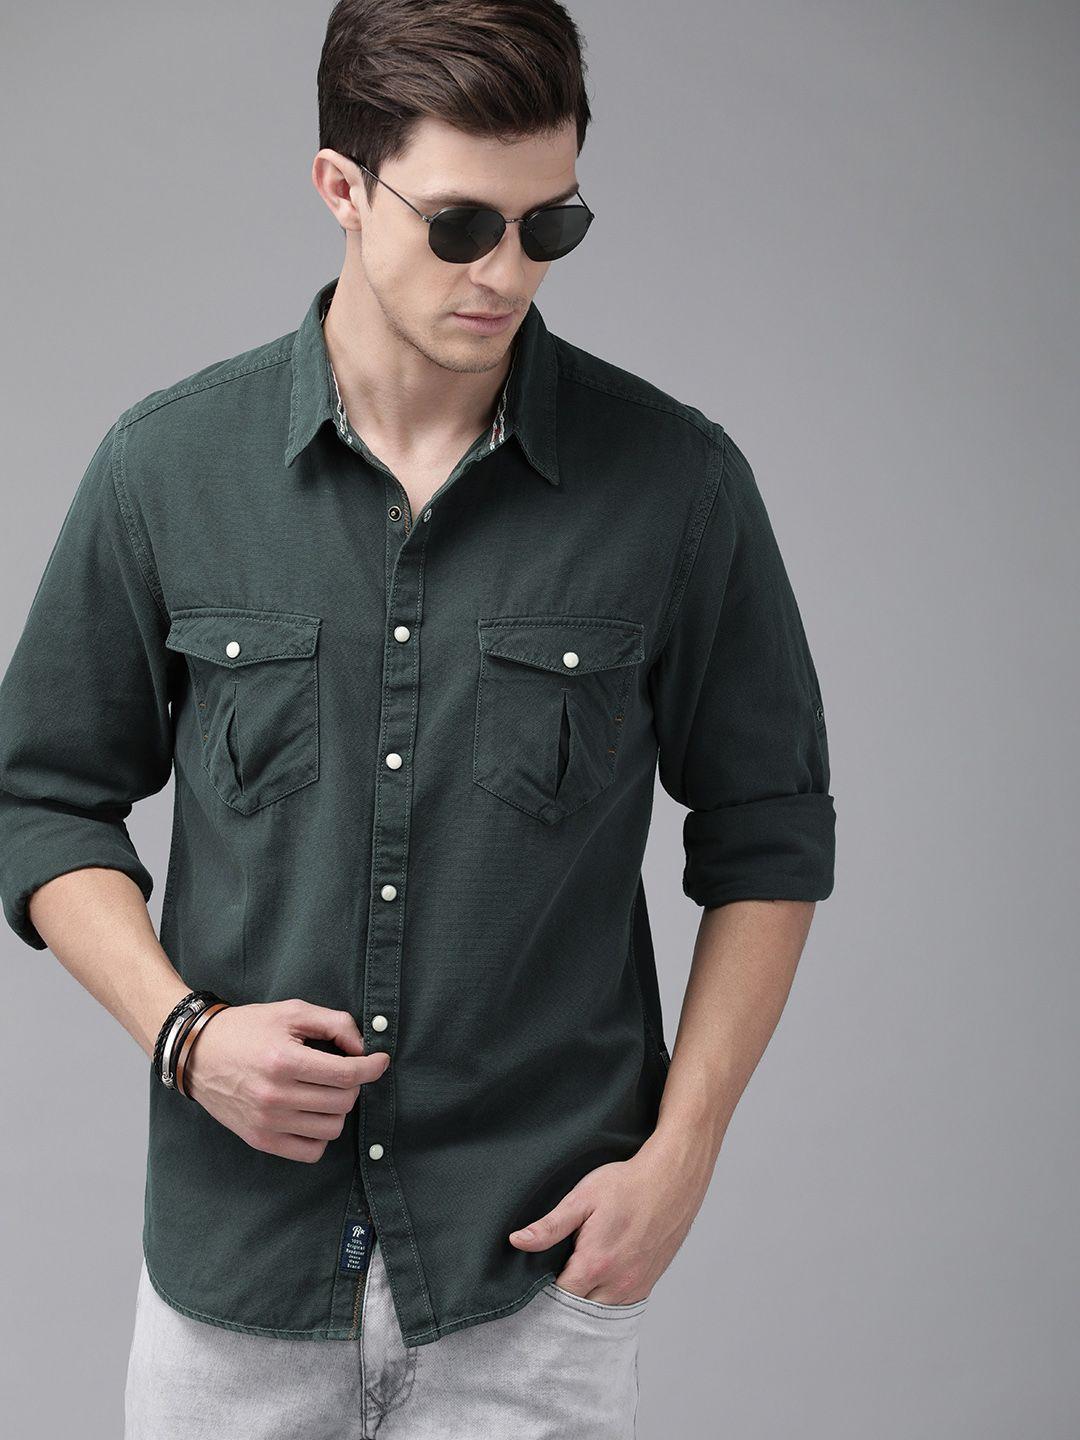 roadster-men-charcoal-grey-regular-fit-solid-casual-shirt